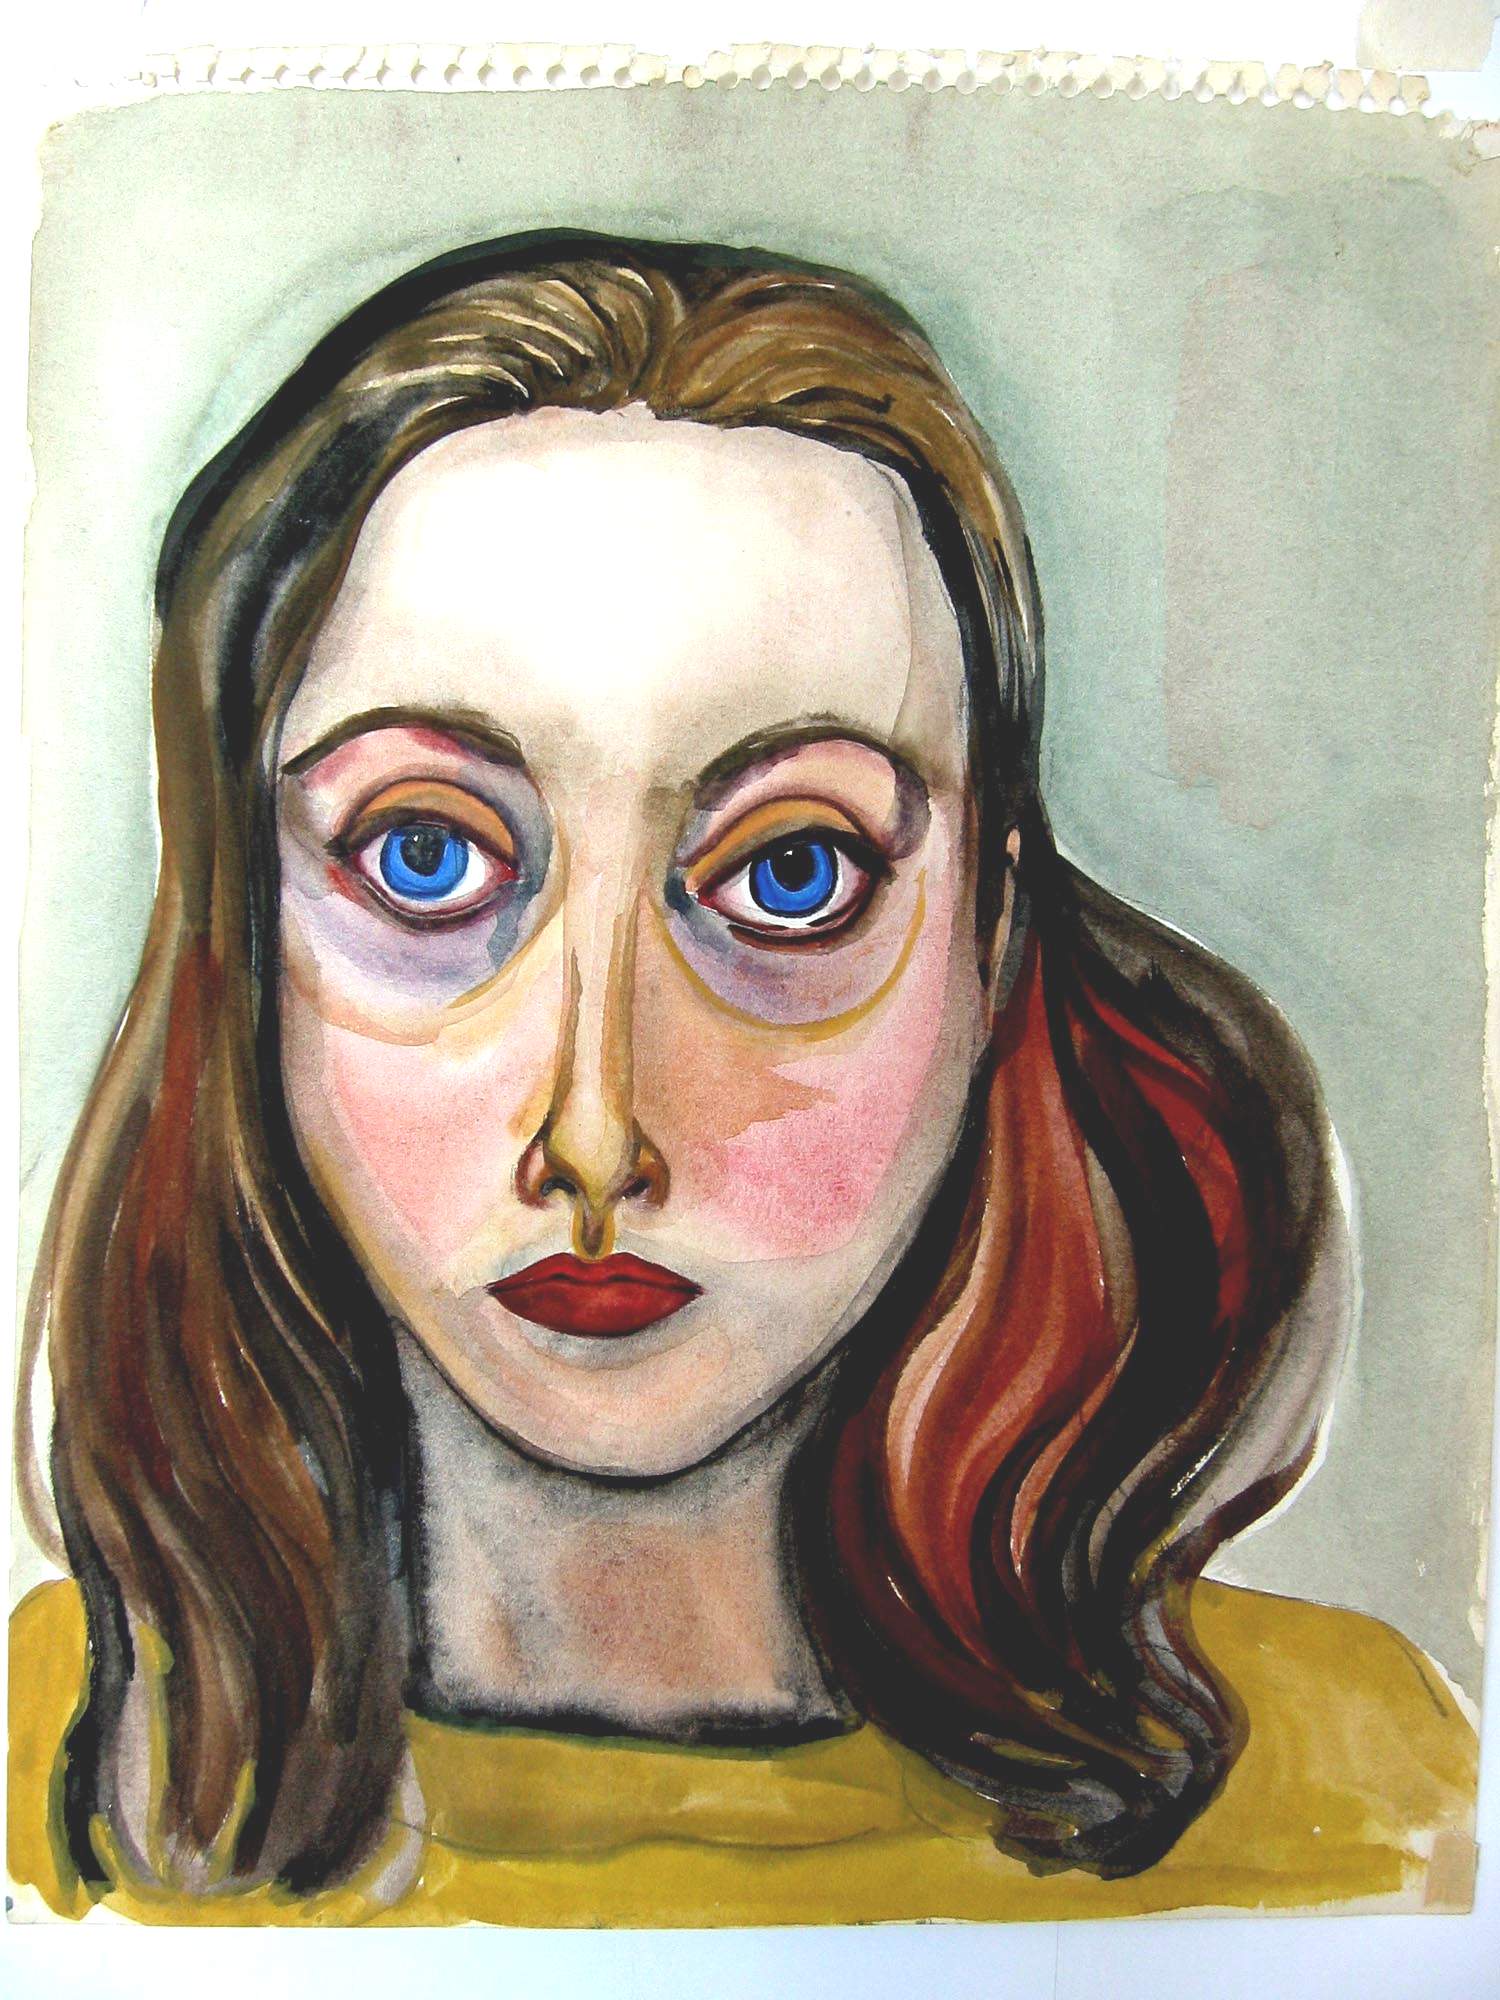 Self-portrait by Jean Smith (11 x 17″ watercolour on paper, circa - img_5449-vvv